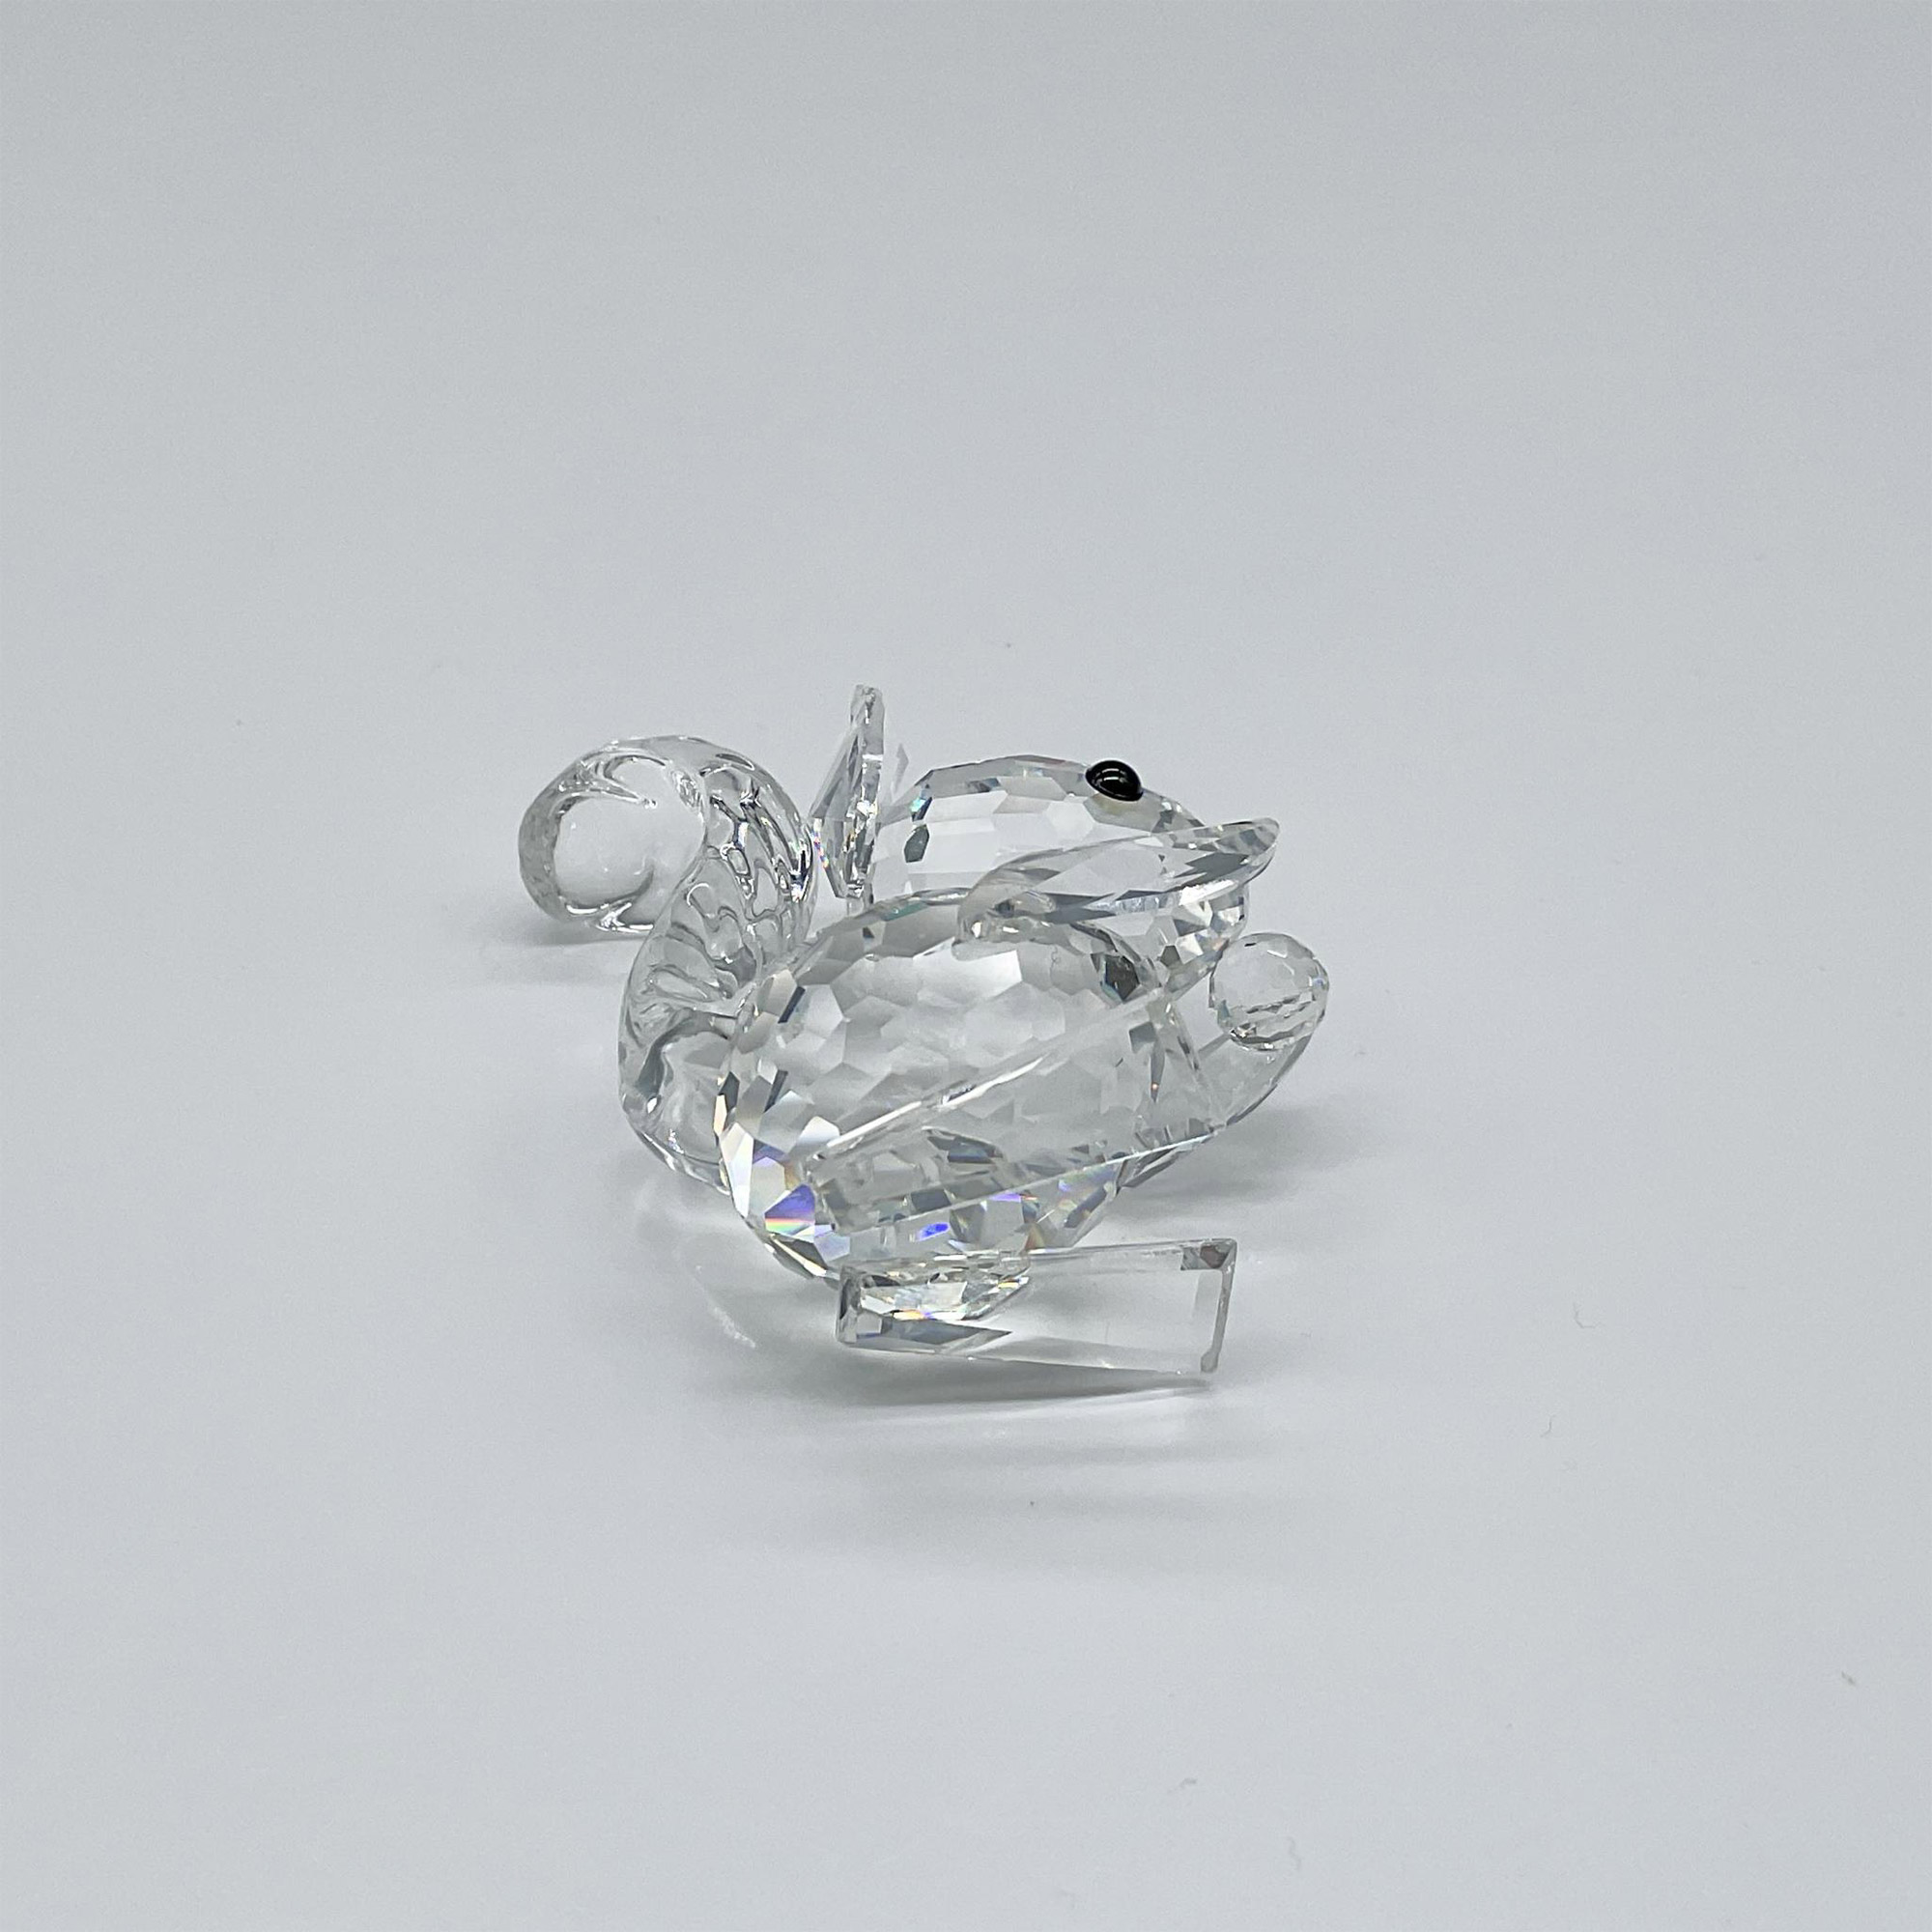 Swarovski Silver Crystal Figurine, Squirrel Long Ears - Image 3 of 4